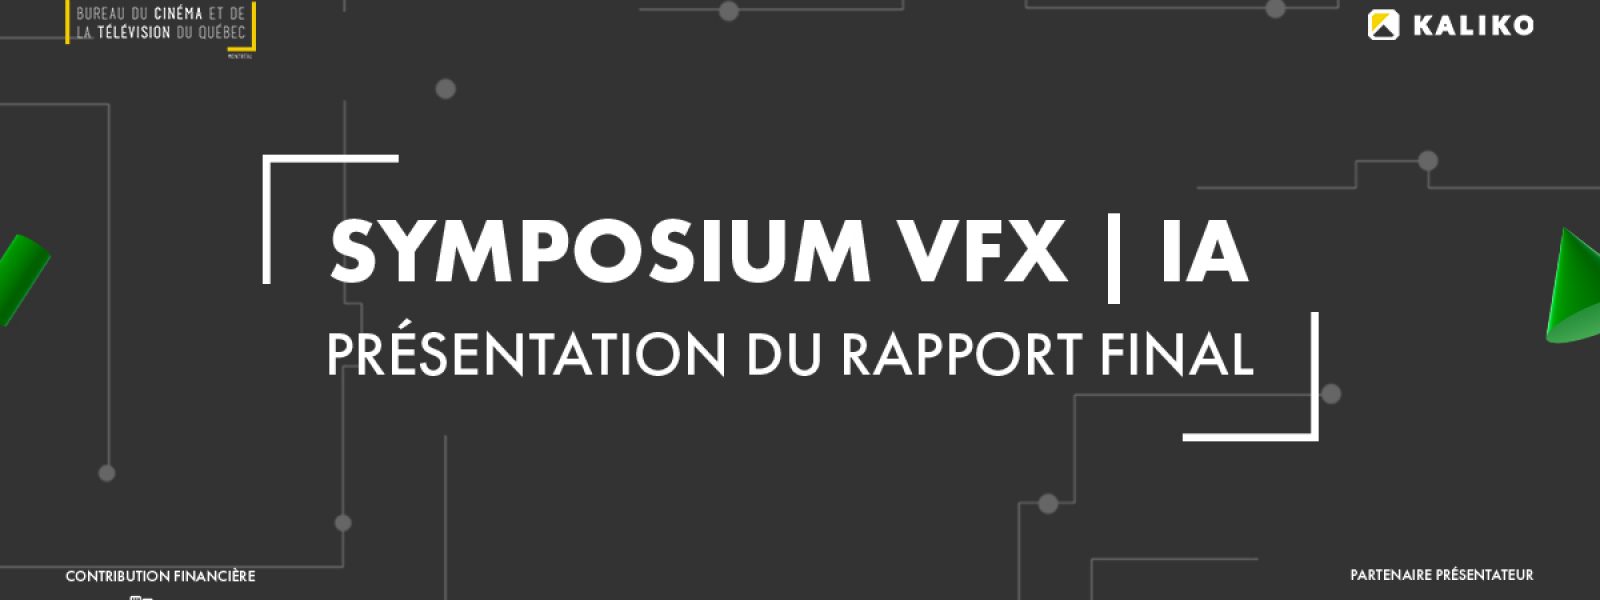 SYMPOSIUM VFX l IA, presentation du rapport final